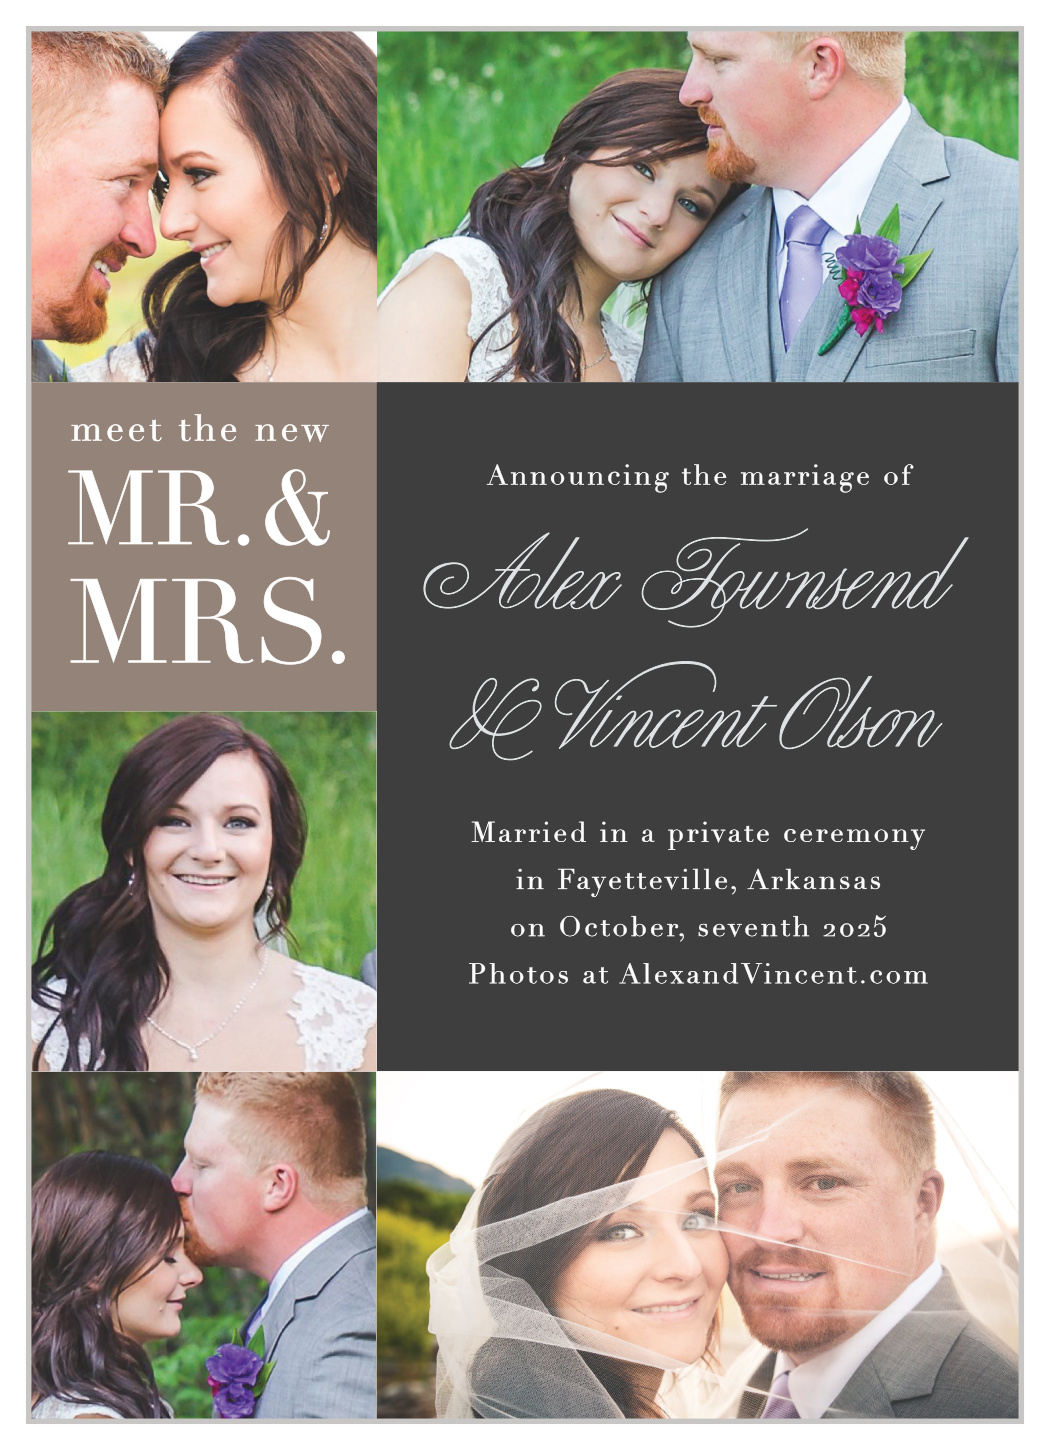 Mr. & Mrs. Wedding Announcements